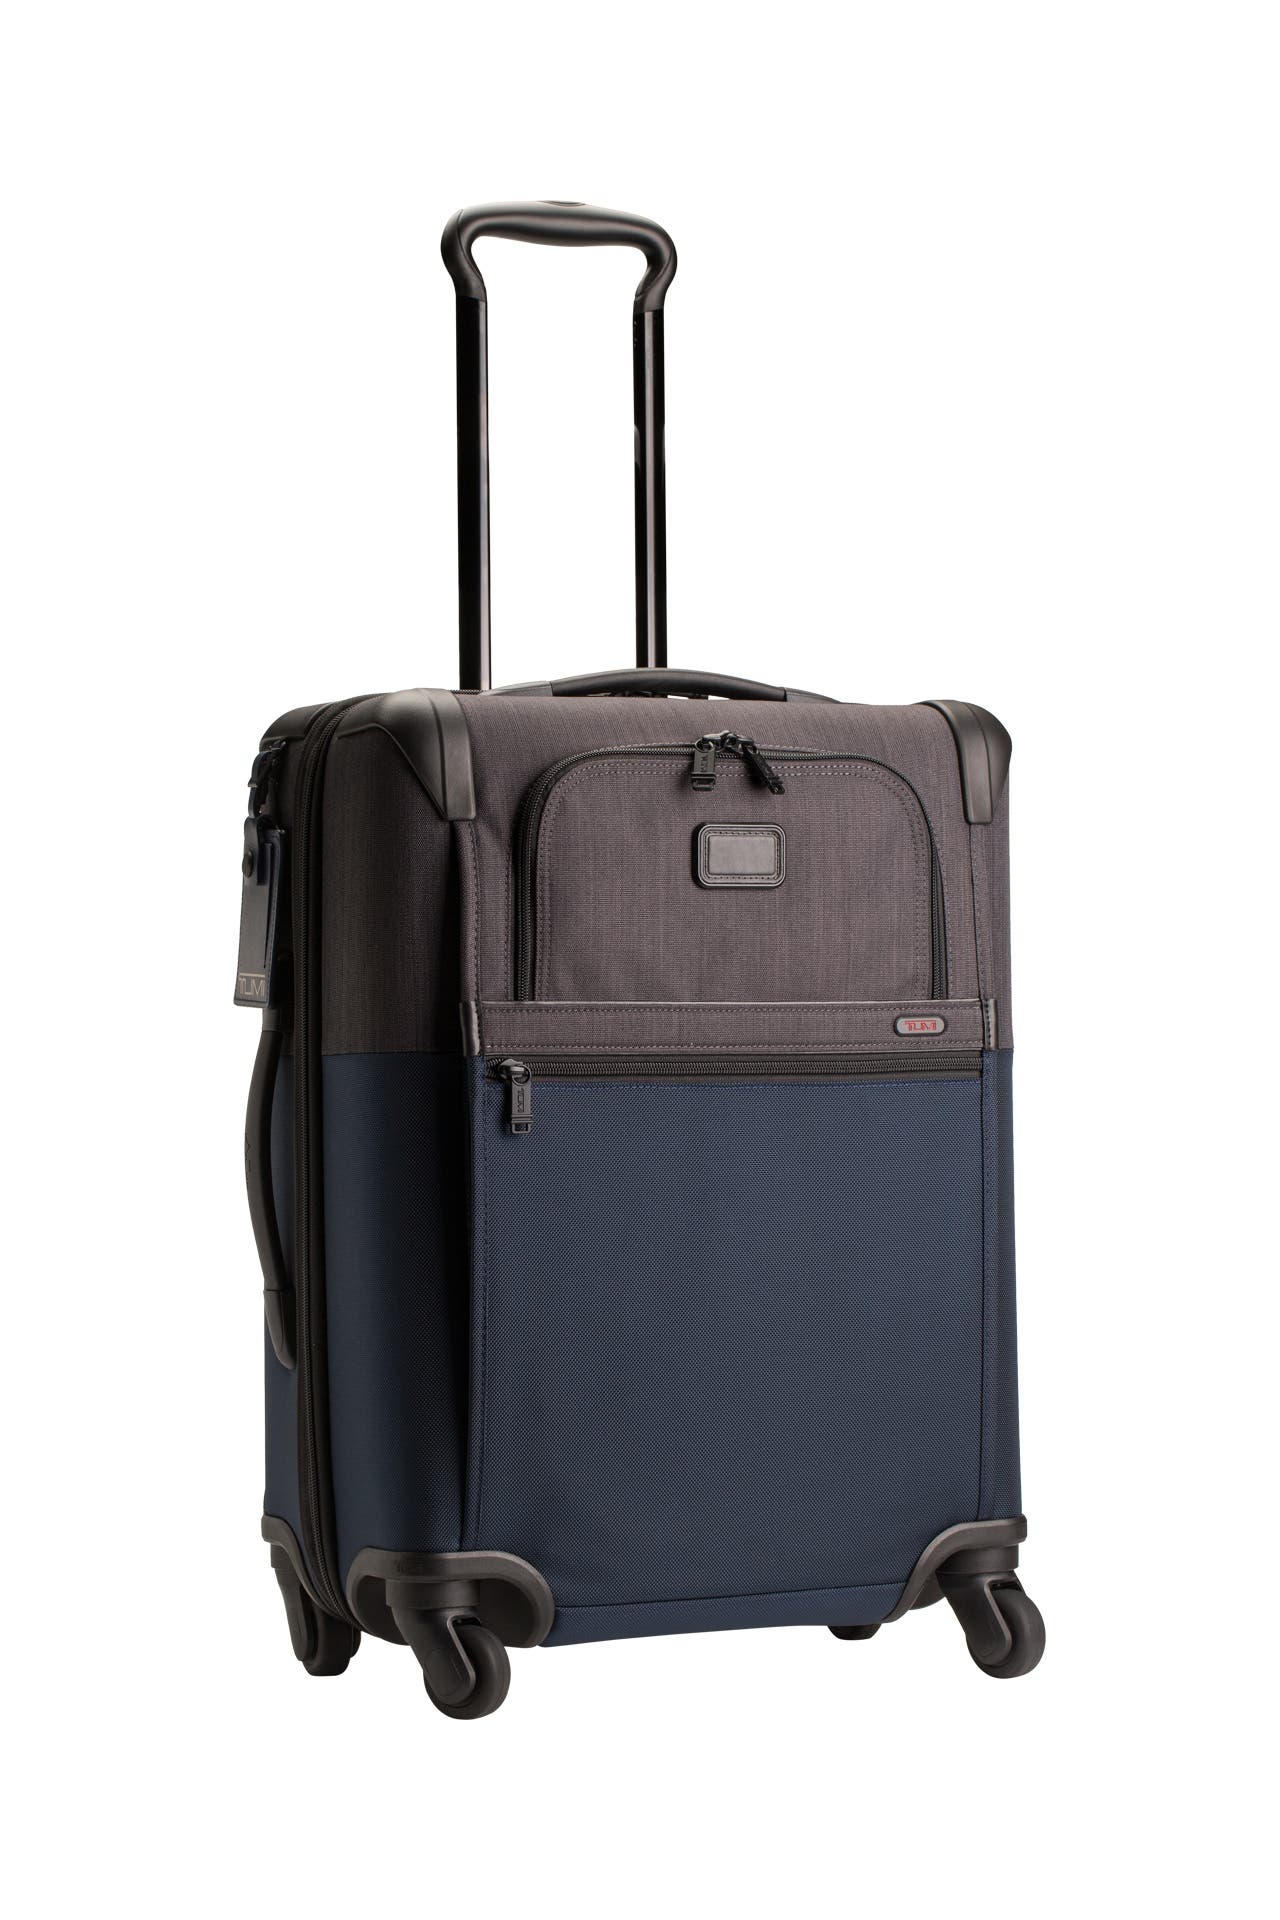 Tumi Alpha 2 Large Wheeled Split Duffel | Bags, Tumi, Luggage bags